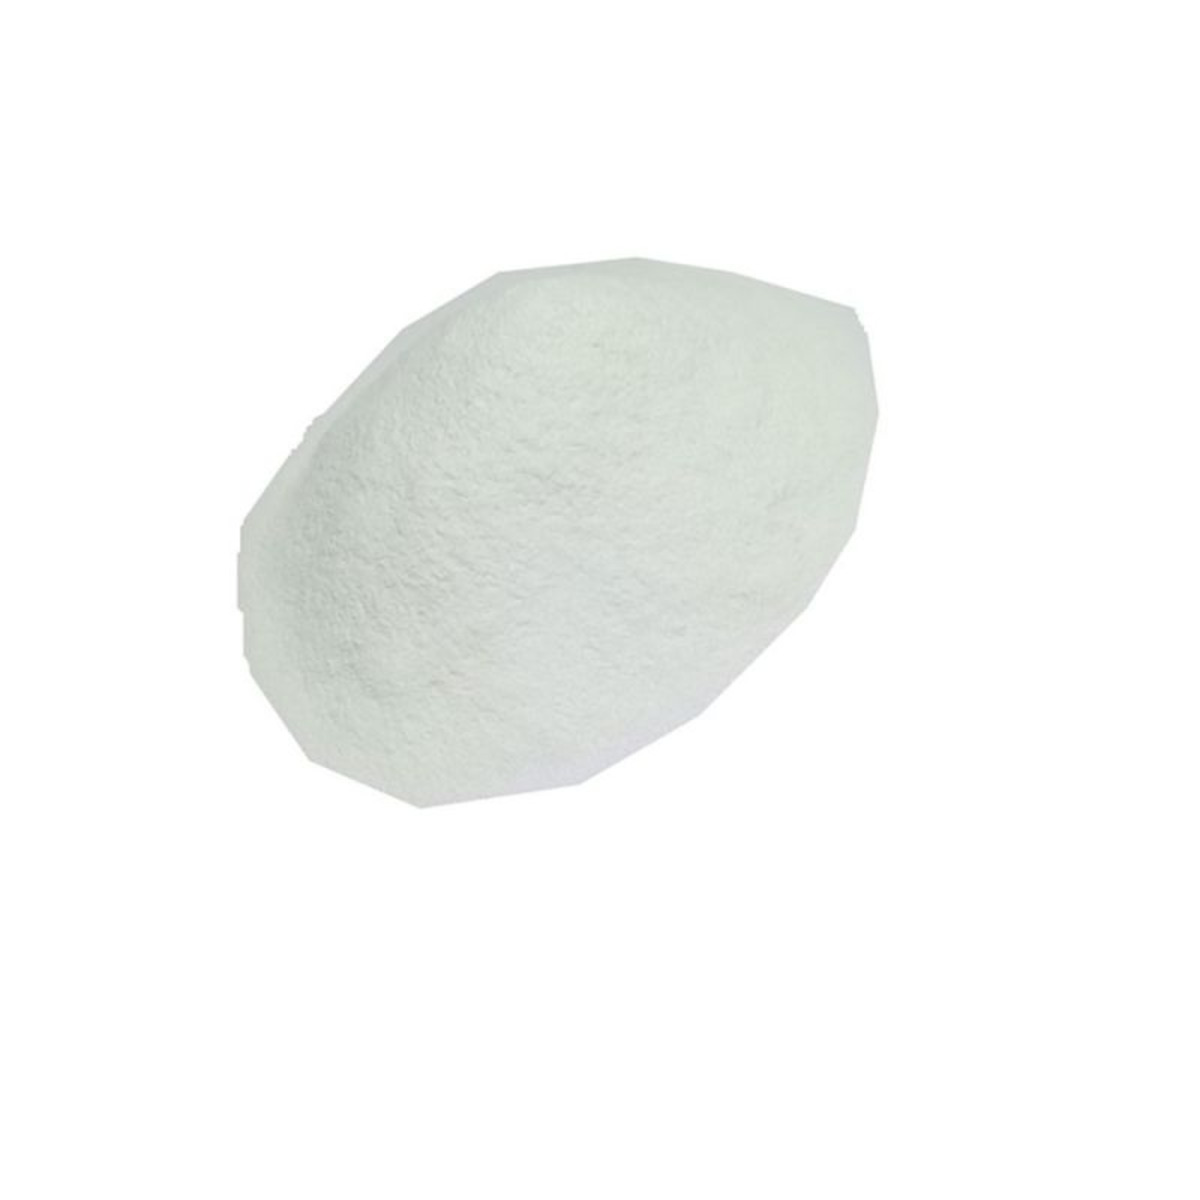 M2 Fishing Plastgum Powder Plasticizer For Ballast -  White - 100 g        